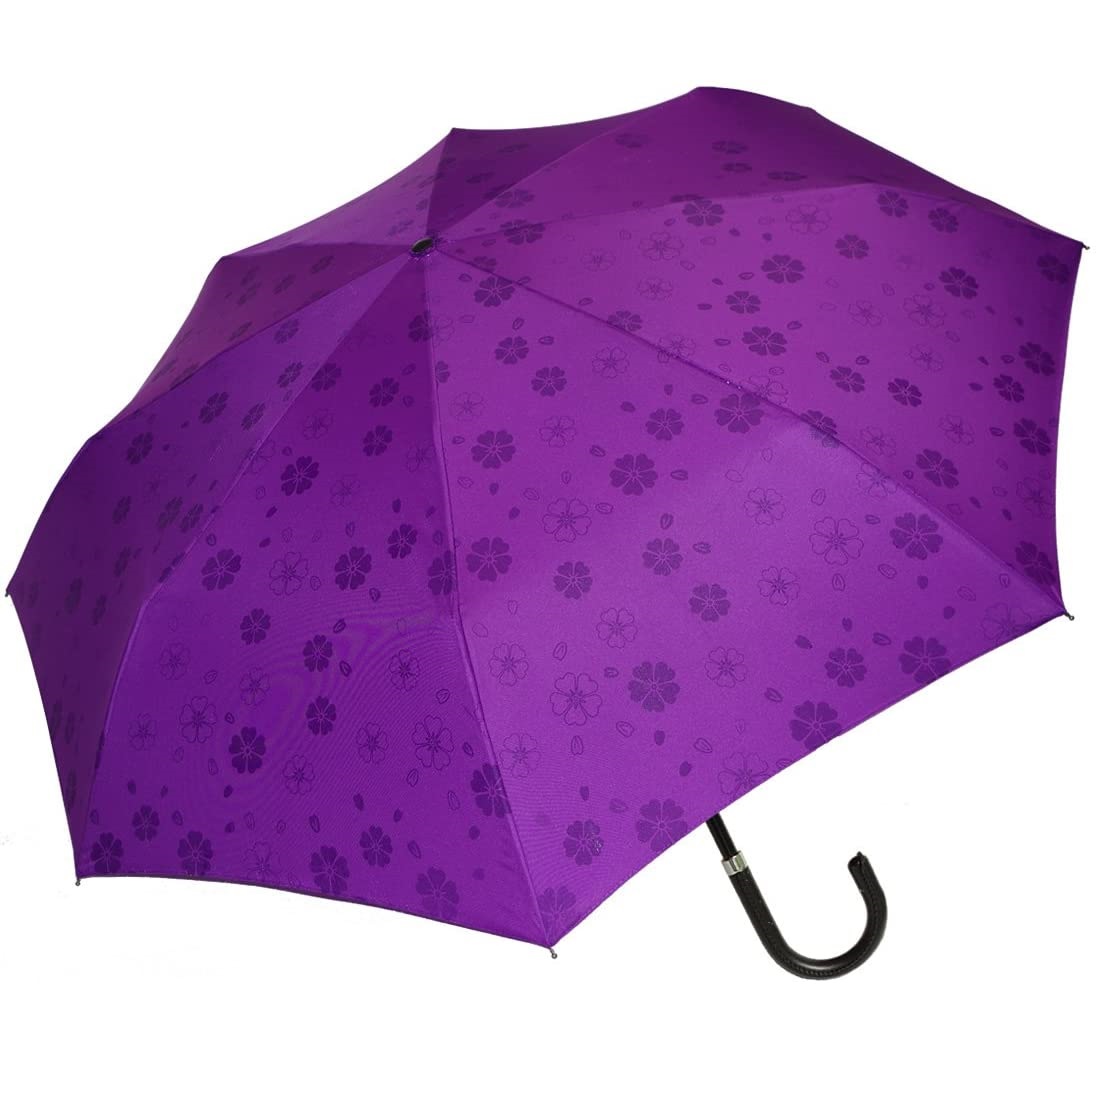 Paraguas Plegable Sombrilla de Mano para Sol Lluvia K02 Fucsia - Promart